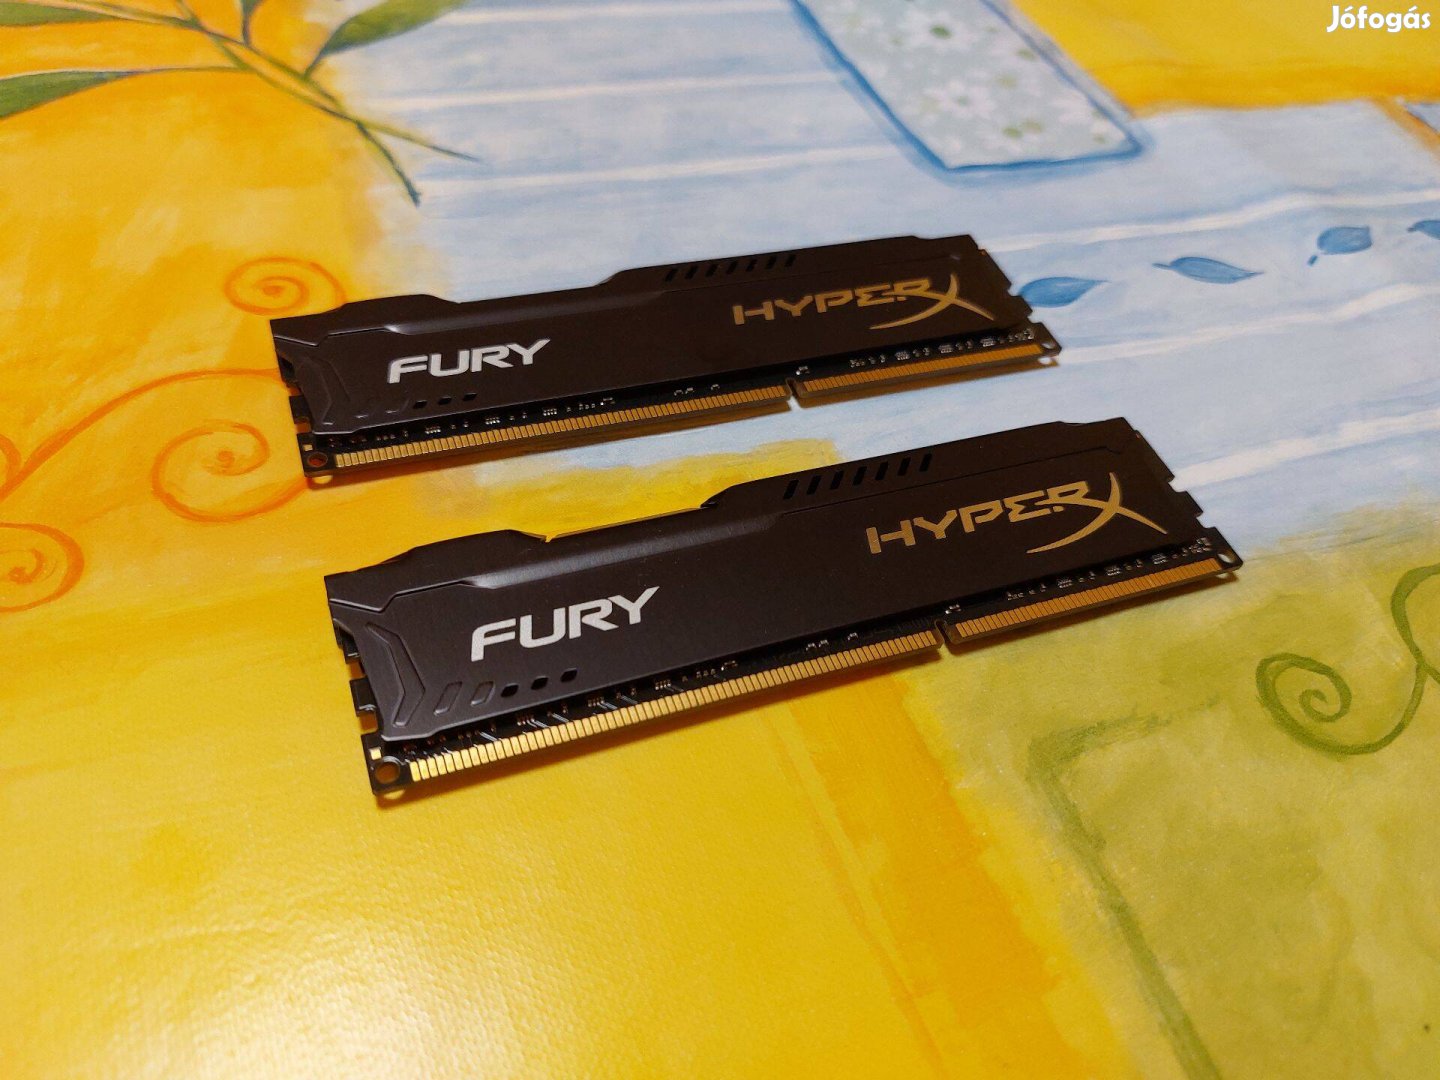 Kingston Hyperx Fury Black DDR3 1866MHz 16GB KIT memória